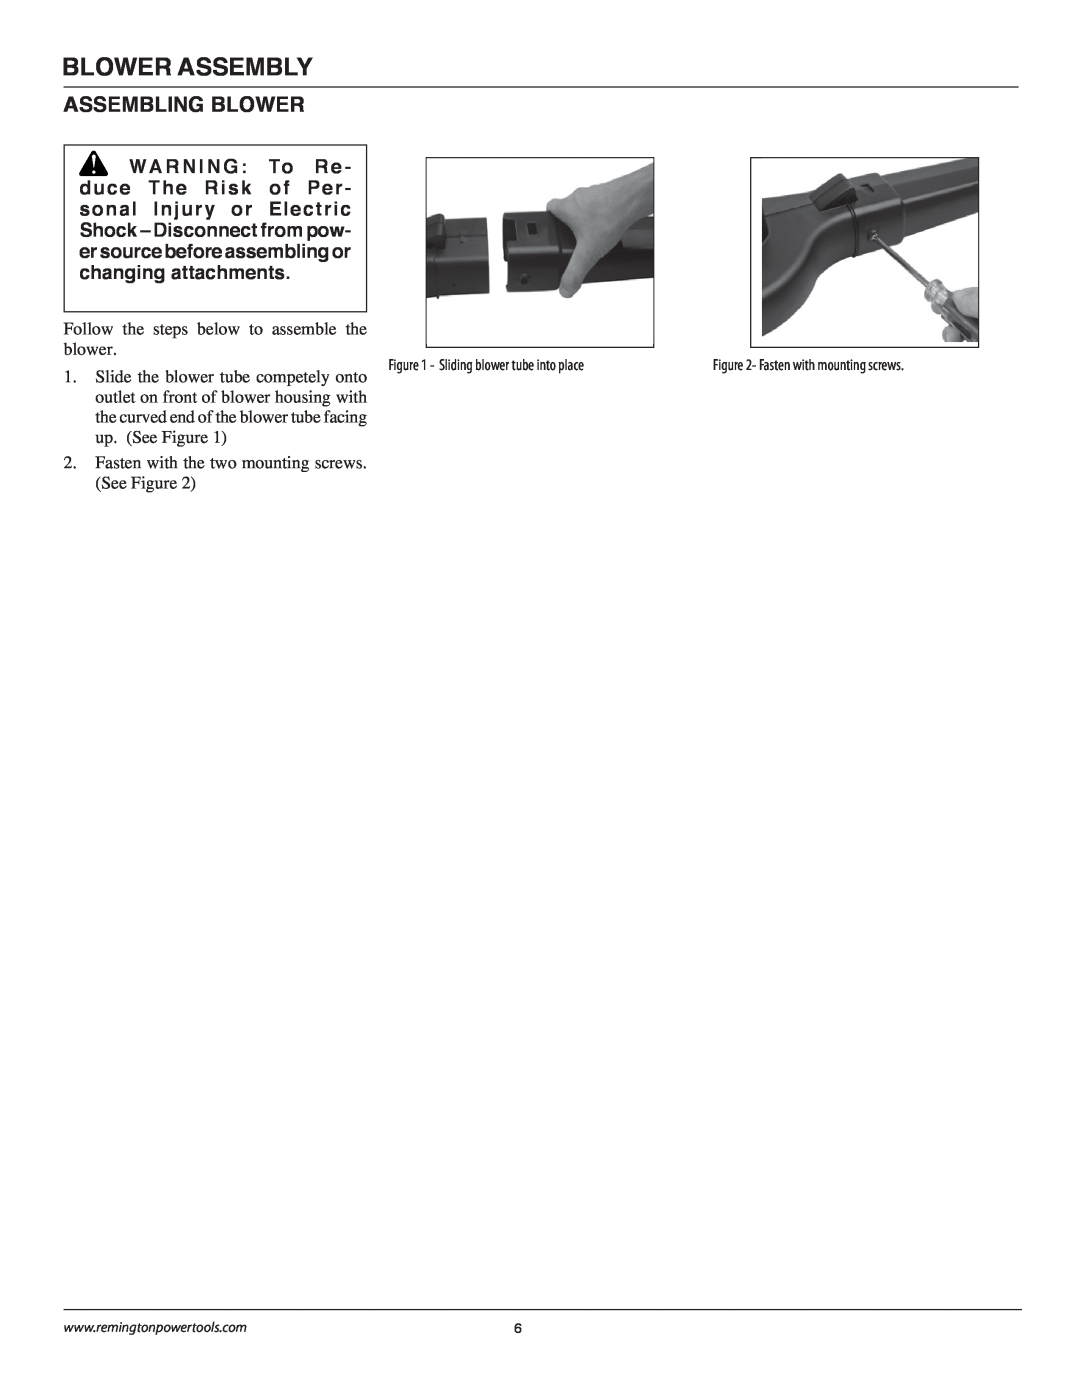 Remington B75150A owner manual Blower Assembly, Assembling Blower 